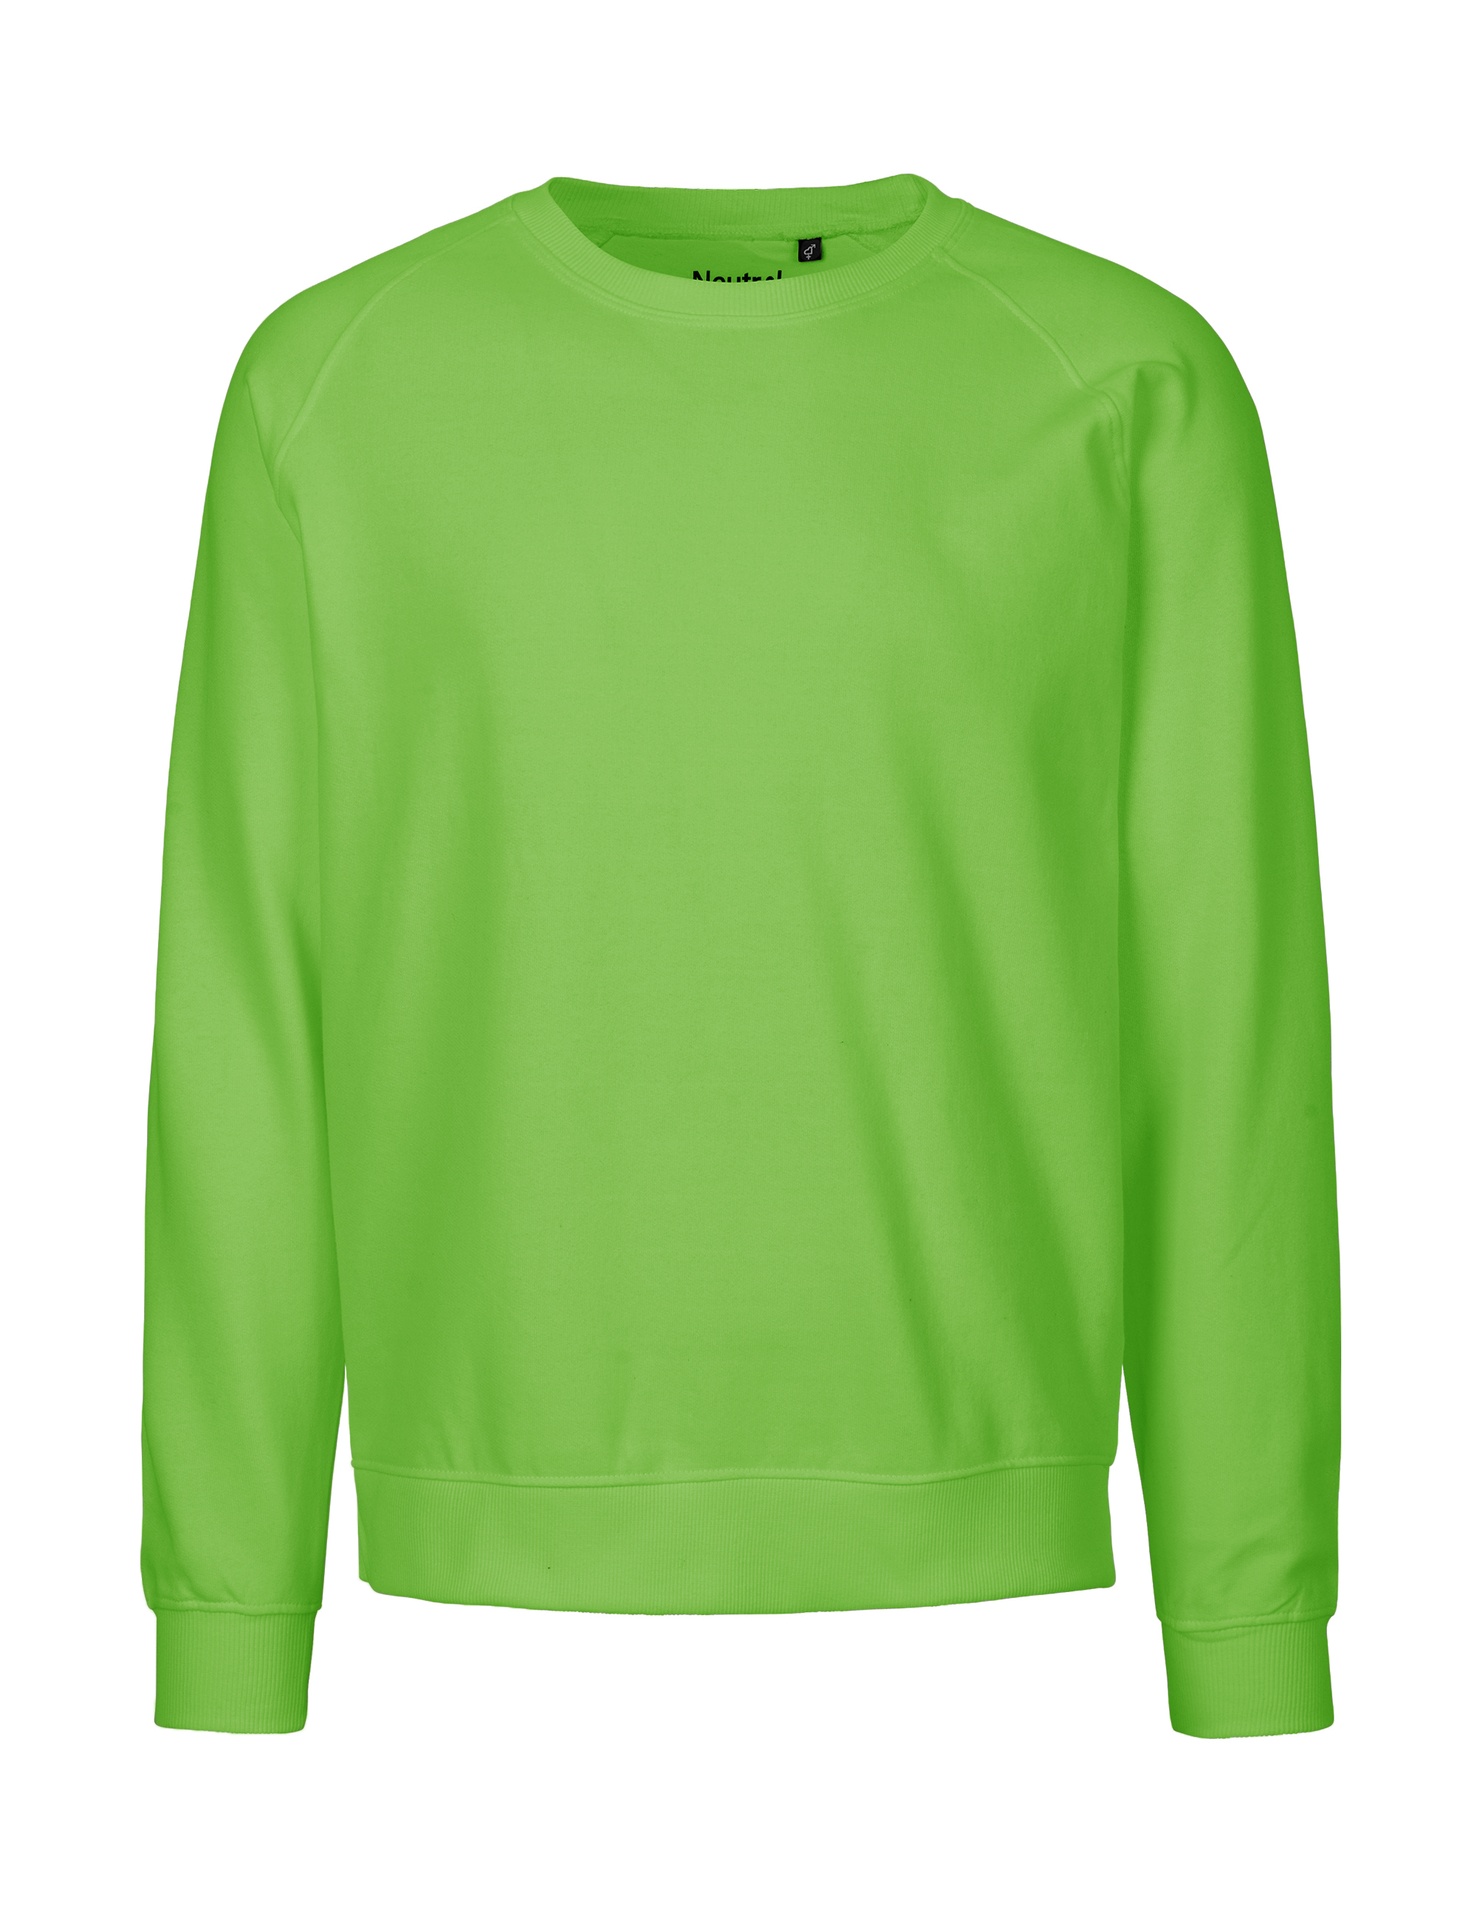 [PR/0271535,77] Unisex Sweatshirt (Lime 12, XS)